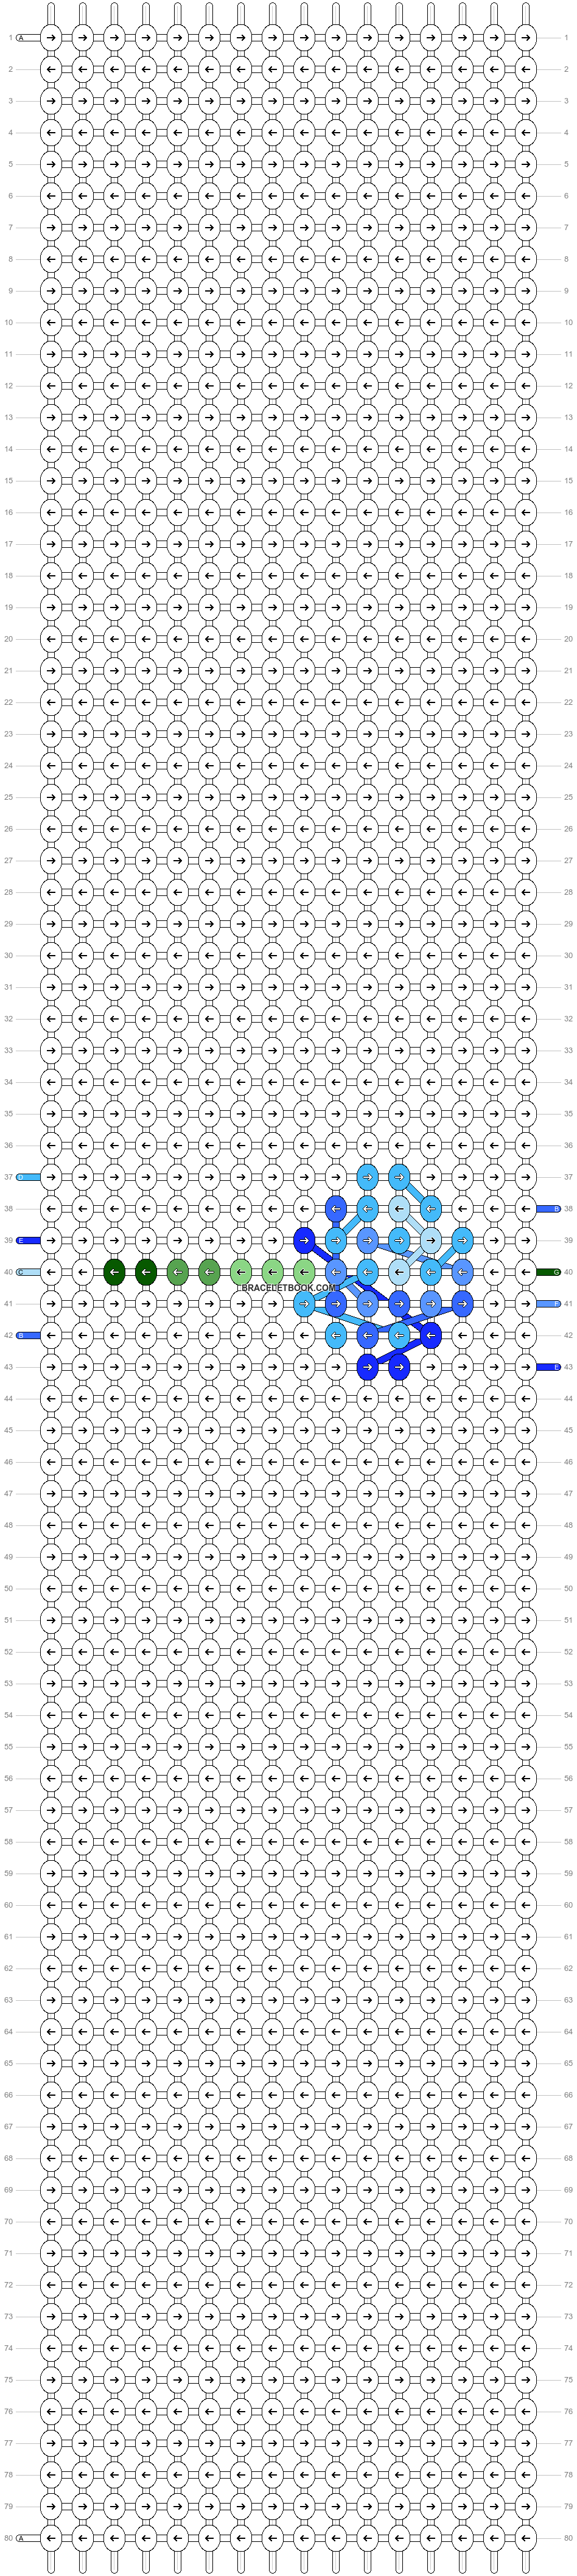 Alpha pattern #48406 variation #81162 pattern